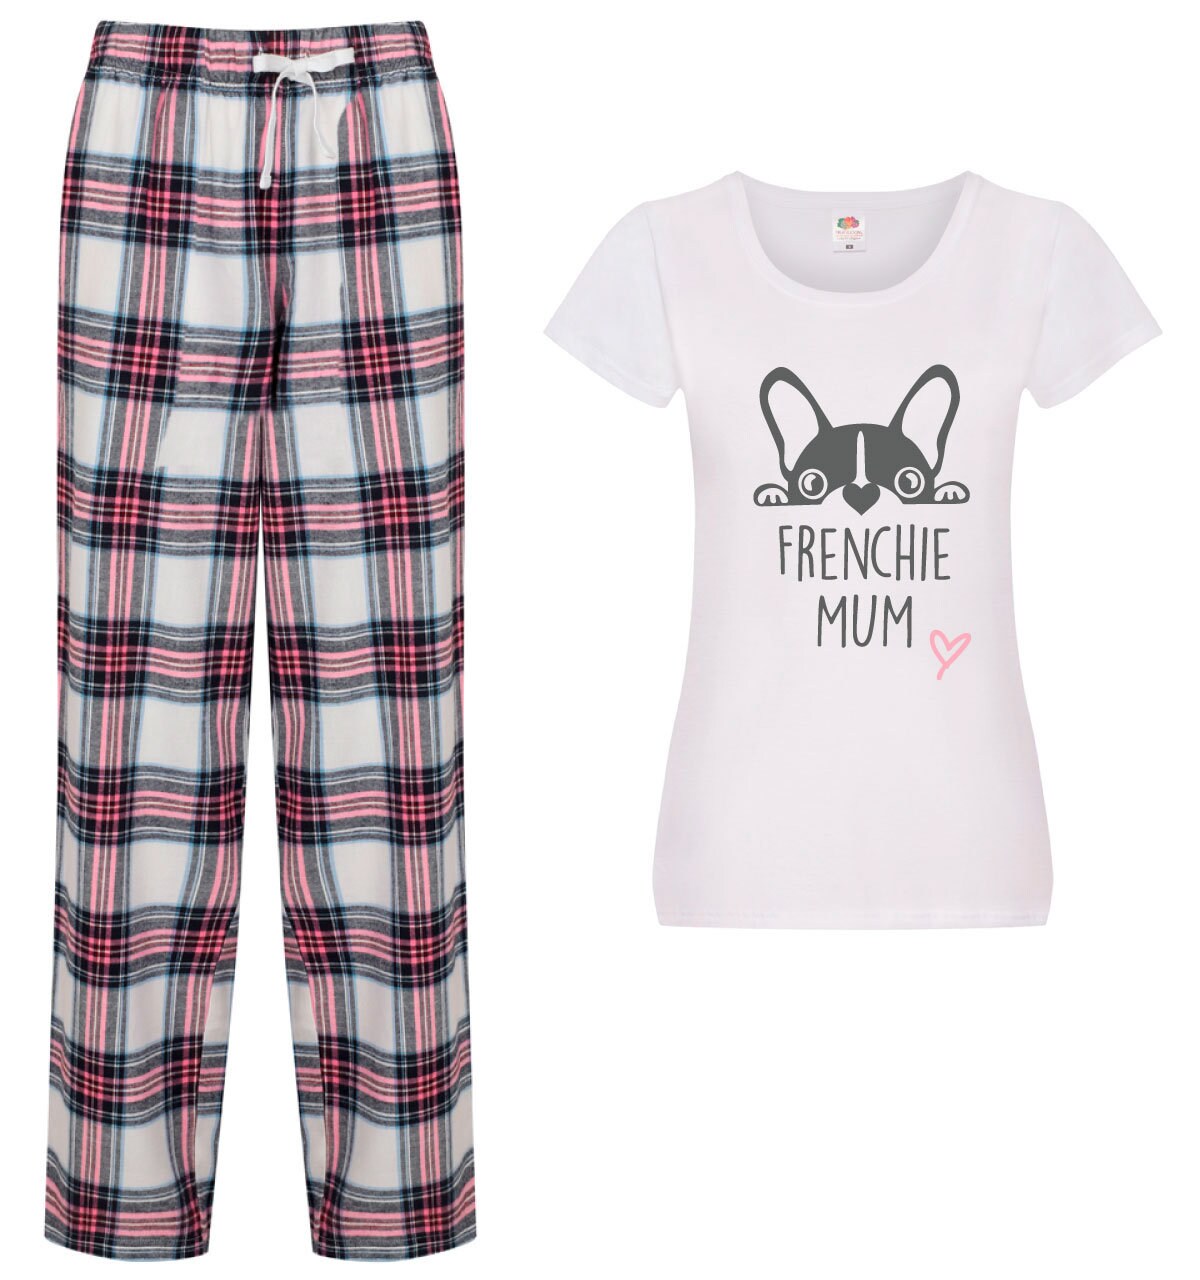 Frenchie Mum PJ's Pyjamas Loungewear Tartan Pants French | Etsy